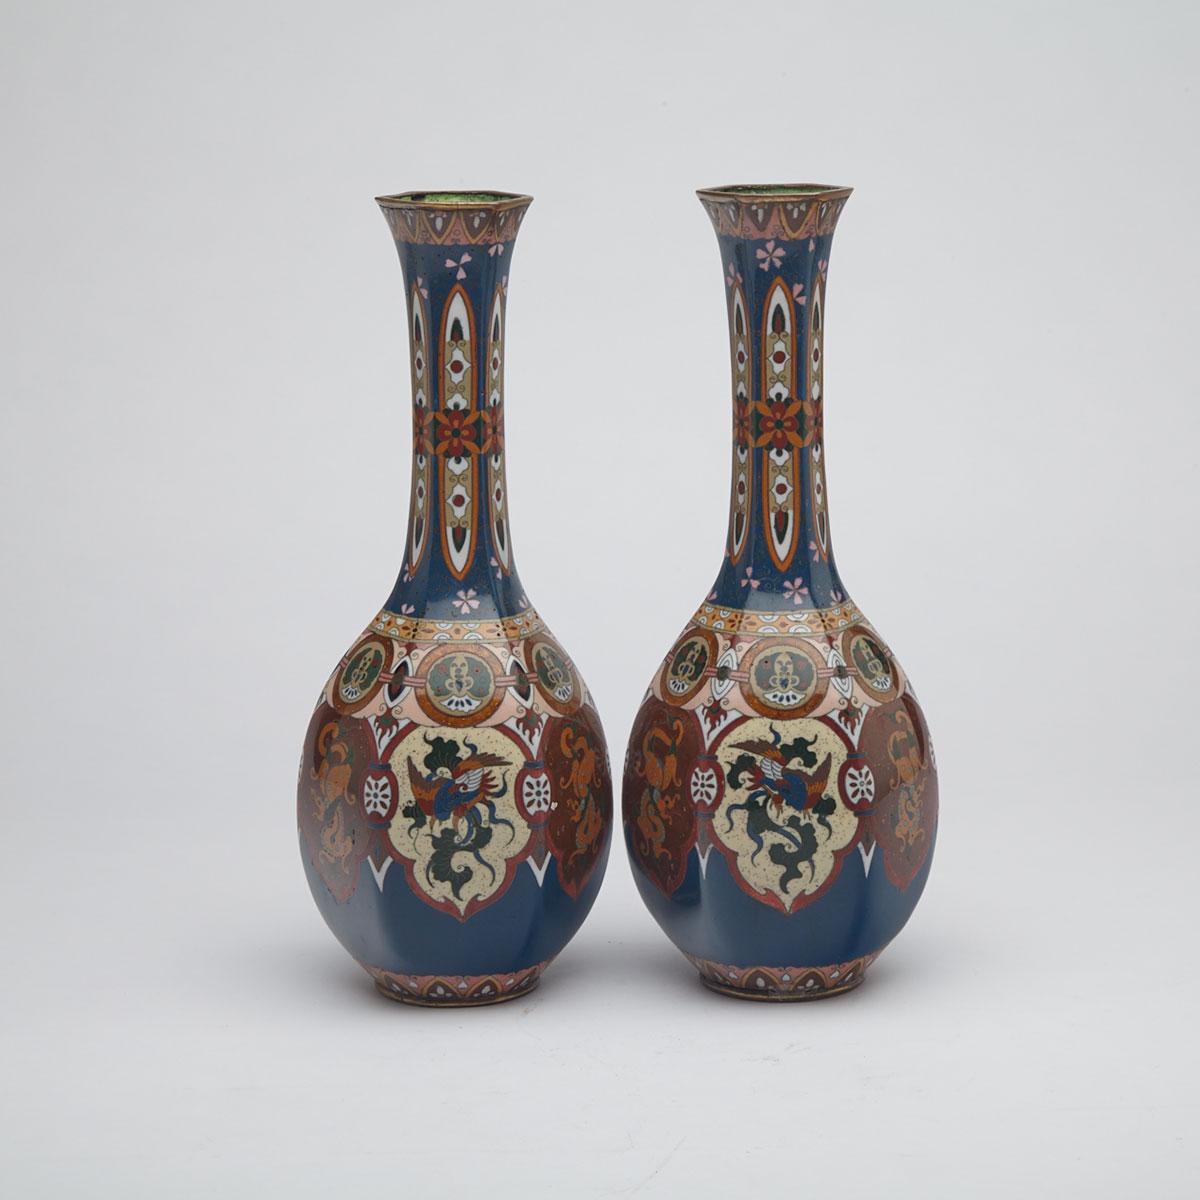 Pair of Cloisonné Enamel Bottle Vases,Japan, Early 20th Century